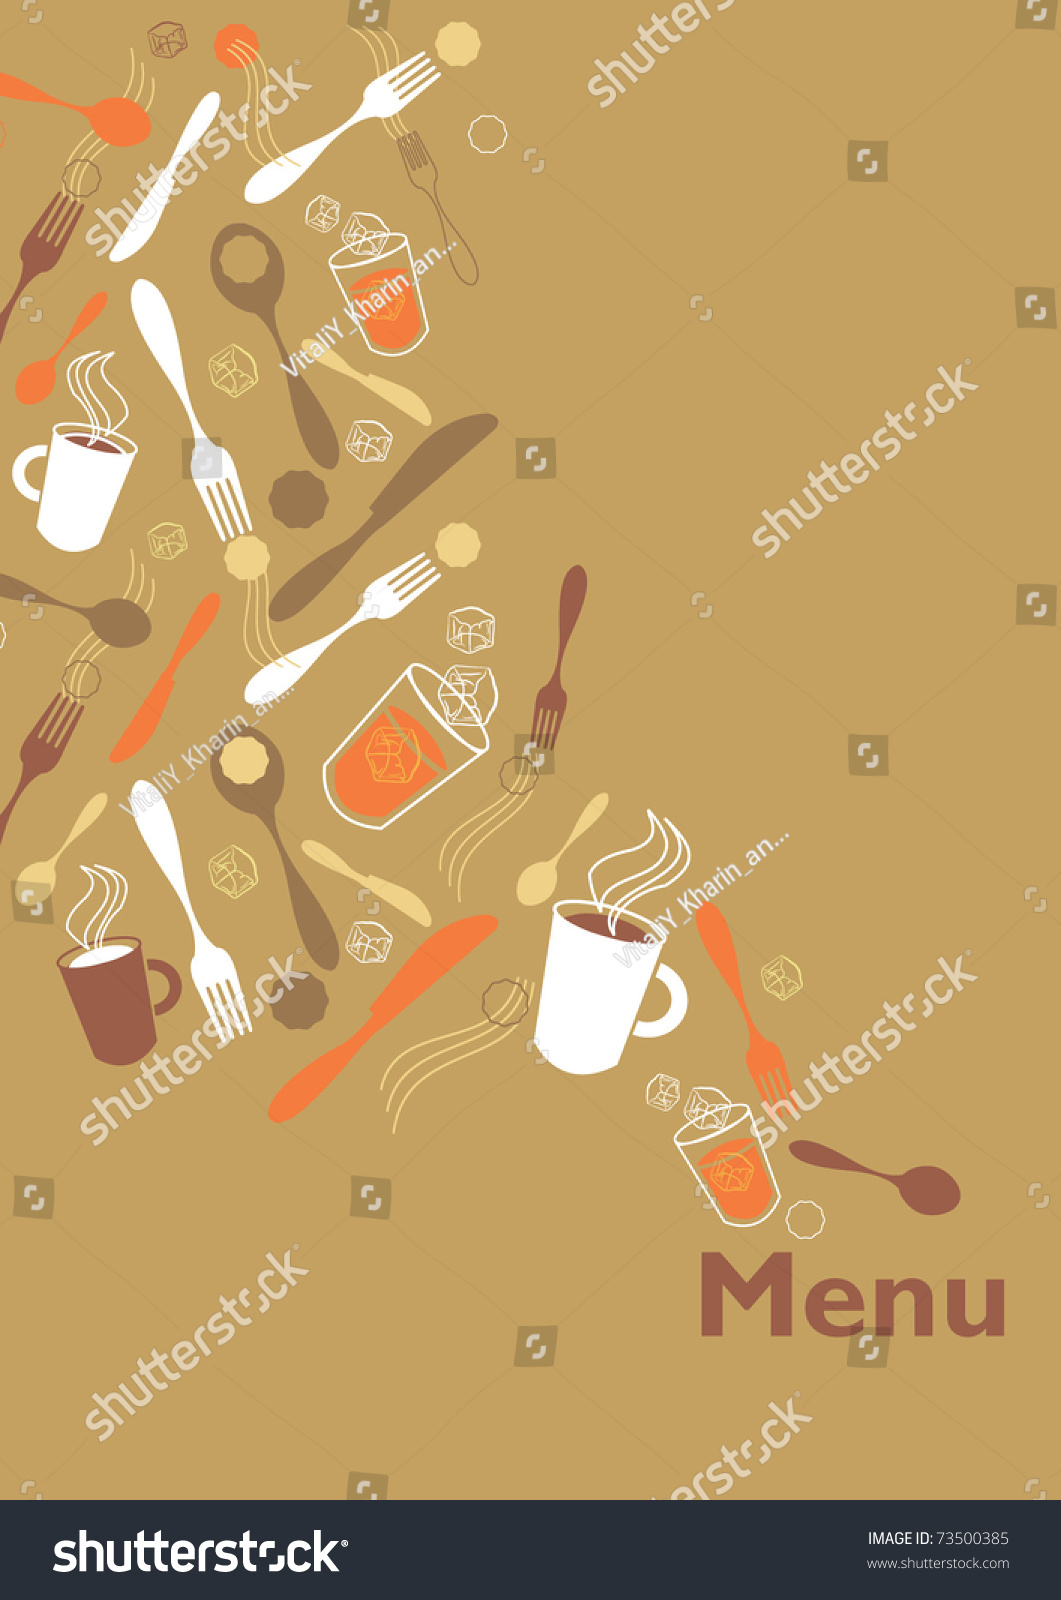 Cafe Breakfast Menu Background Stock Vector Illustration 73500385